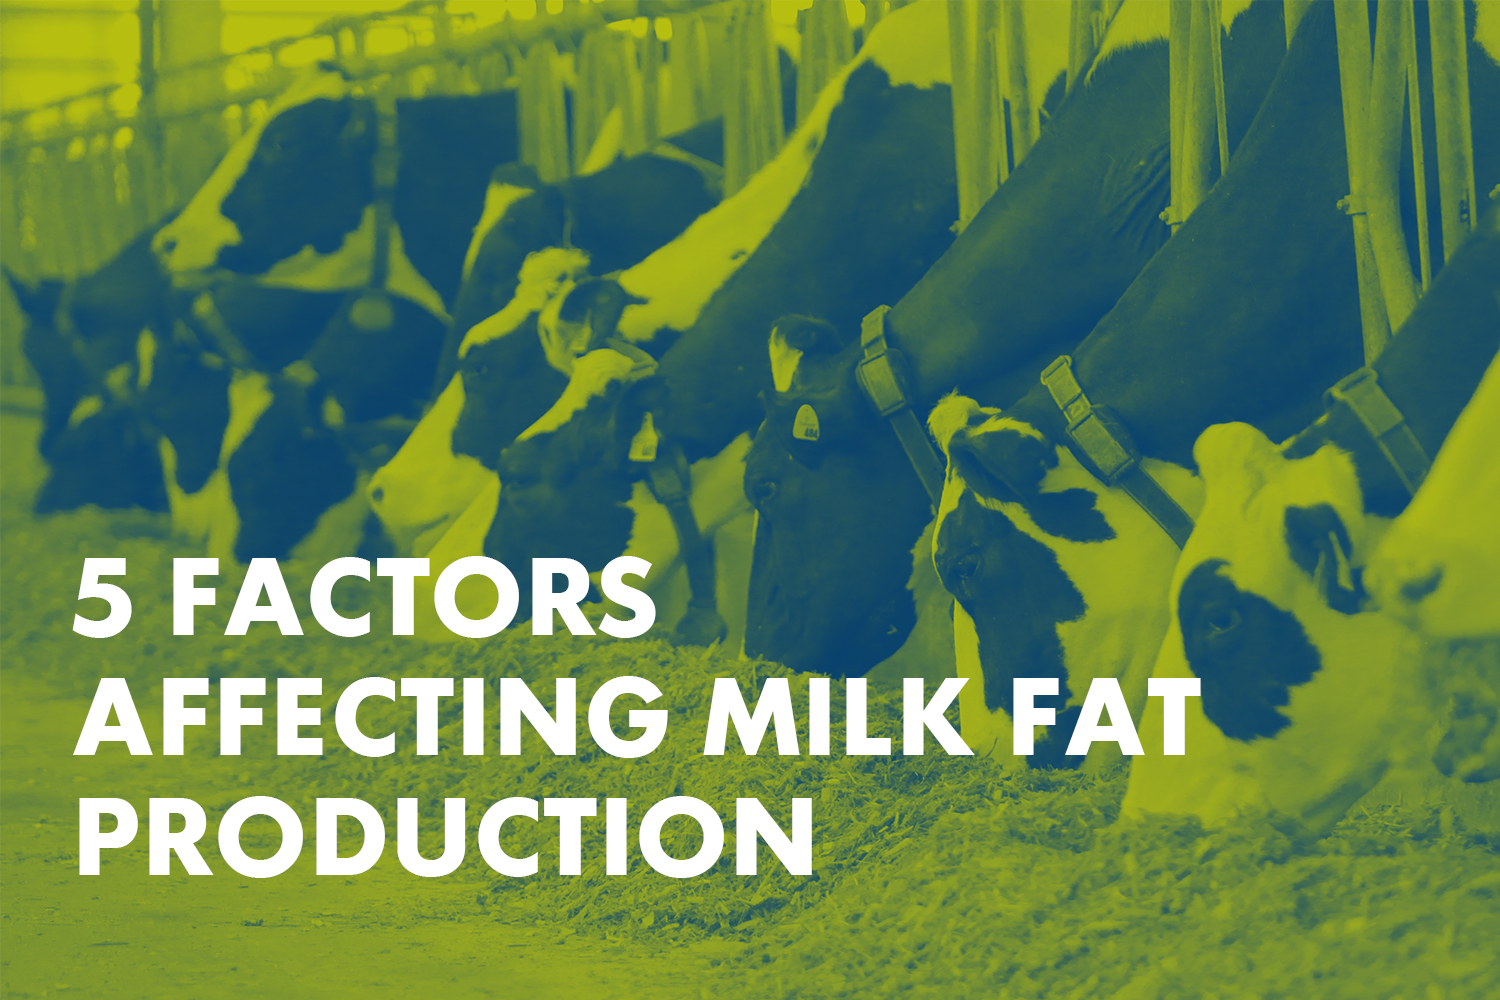 Gated content_5 factors affecting milk fat production.png